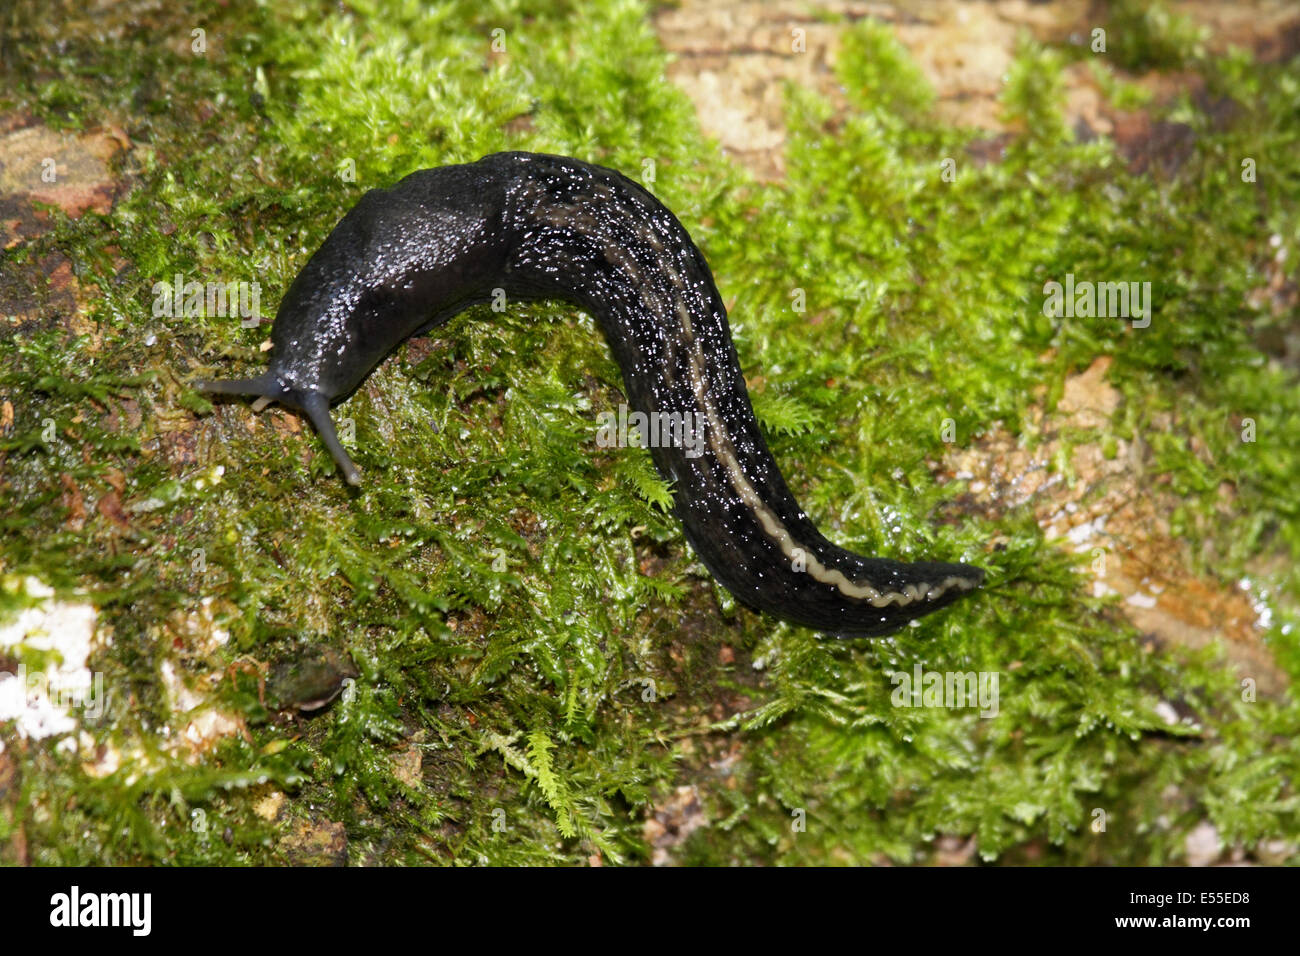 A slug of ancient woodland Limax cinereoniger in Poland Stock Photo